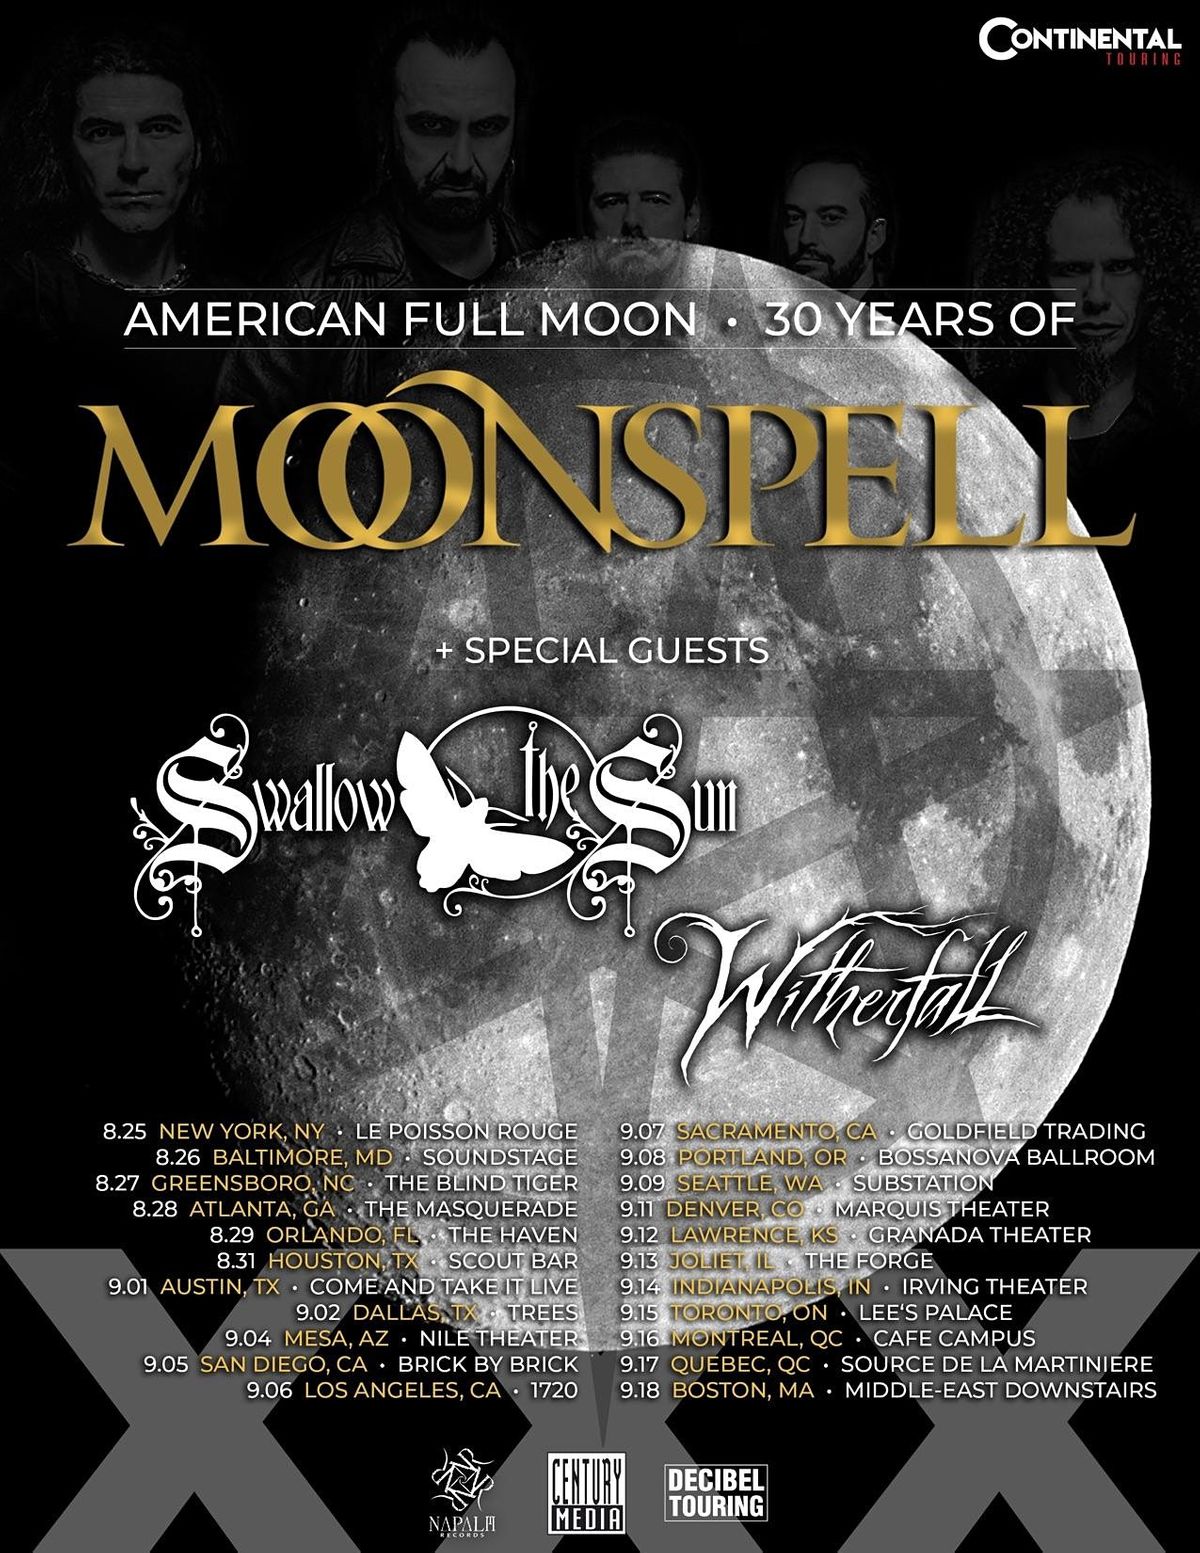 American Full Moon: 30 Years of MOONSPELL